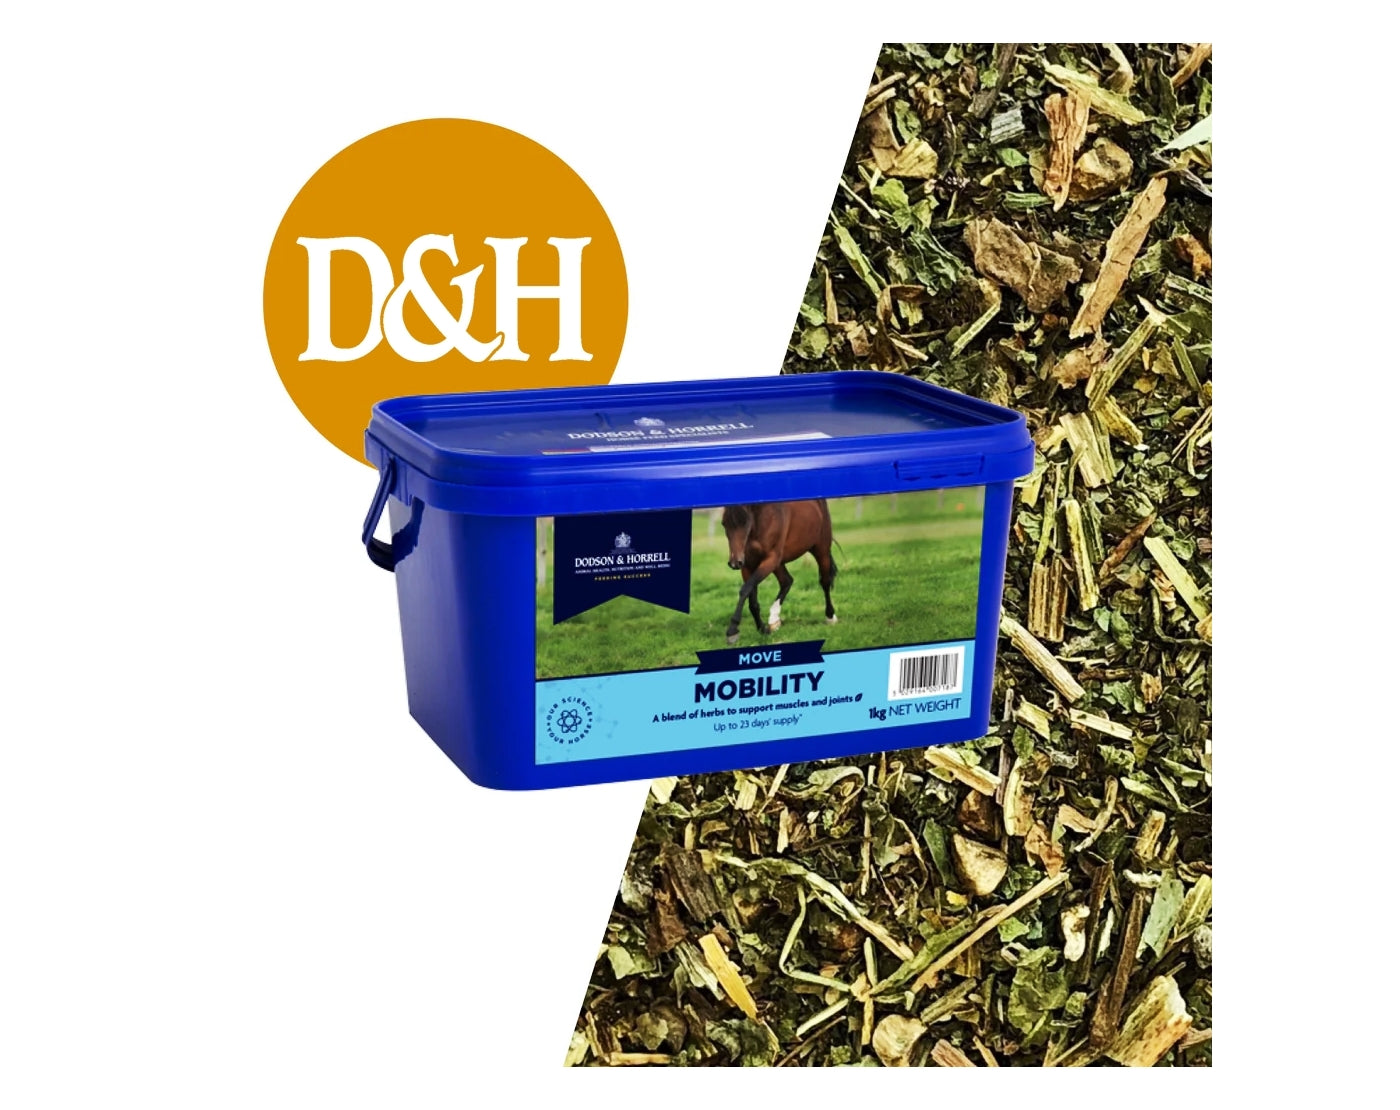 Dodson & Horrell Mobility 1kg | Horse Supplement - Buy Online SPR Centre UK